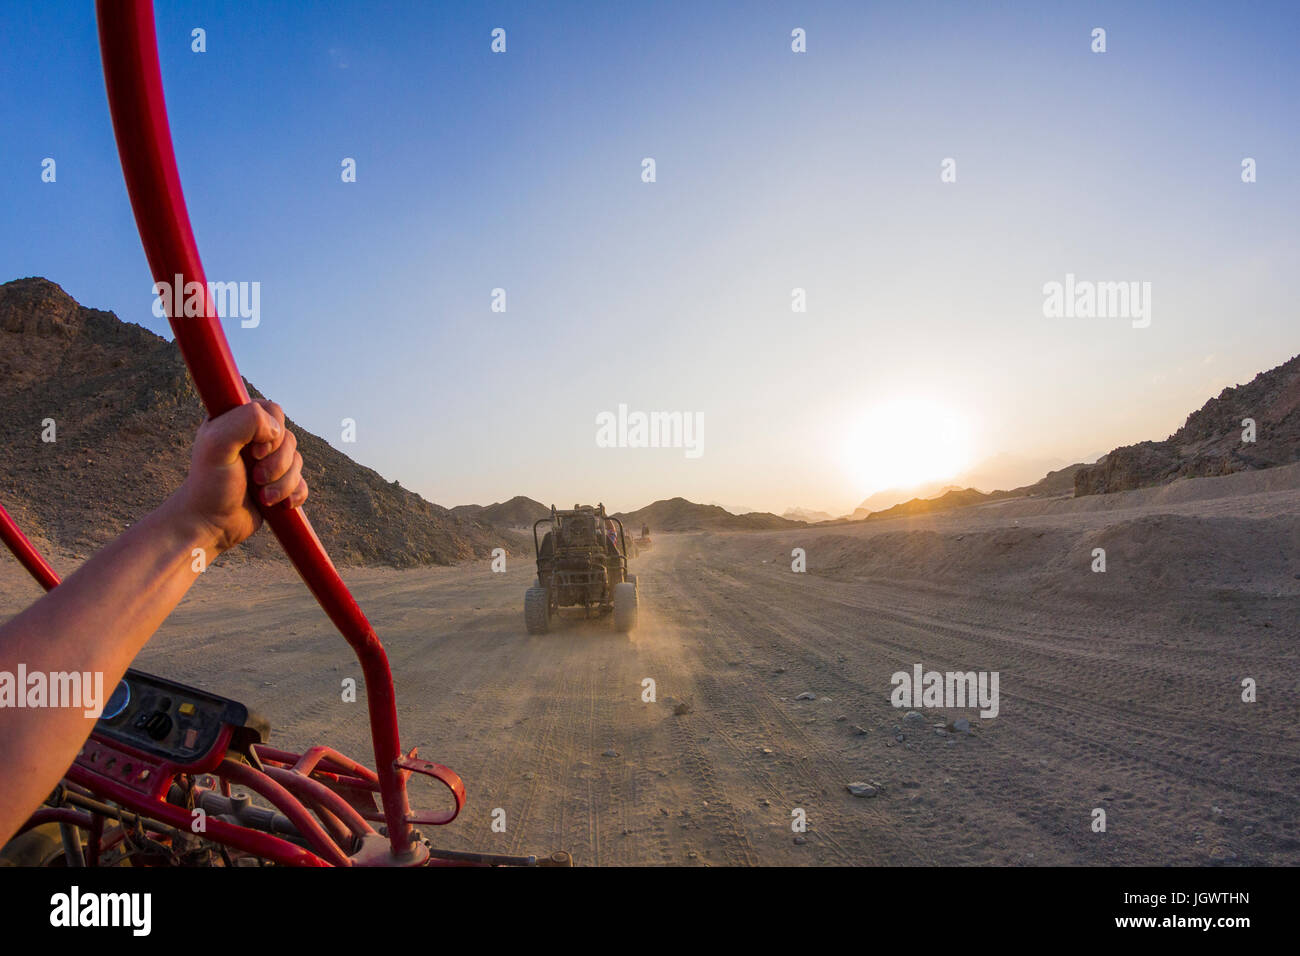 Personal perspective view of man's arm driving beach buggy in desert, Hurghada, Al Bahr al Ahmar, Egypt Stock Photo